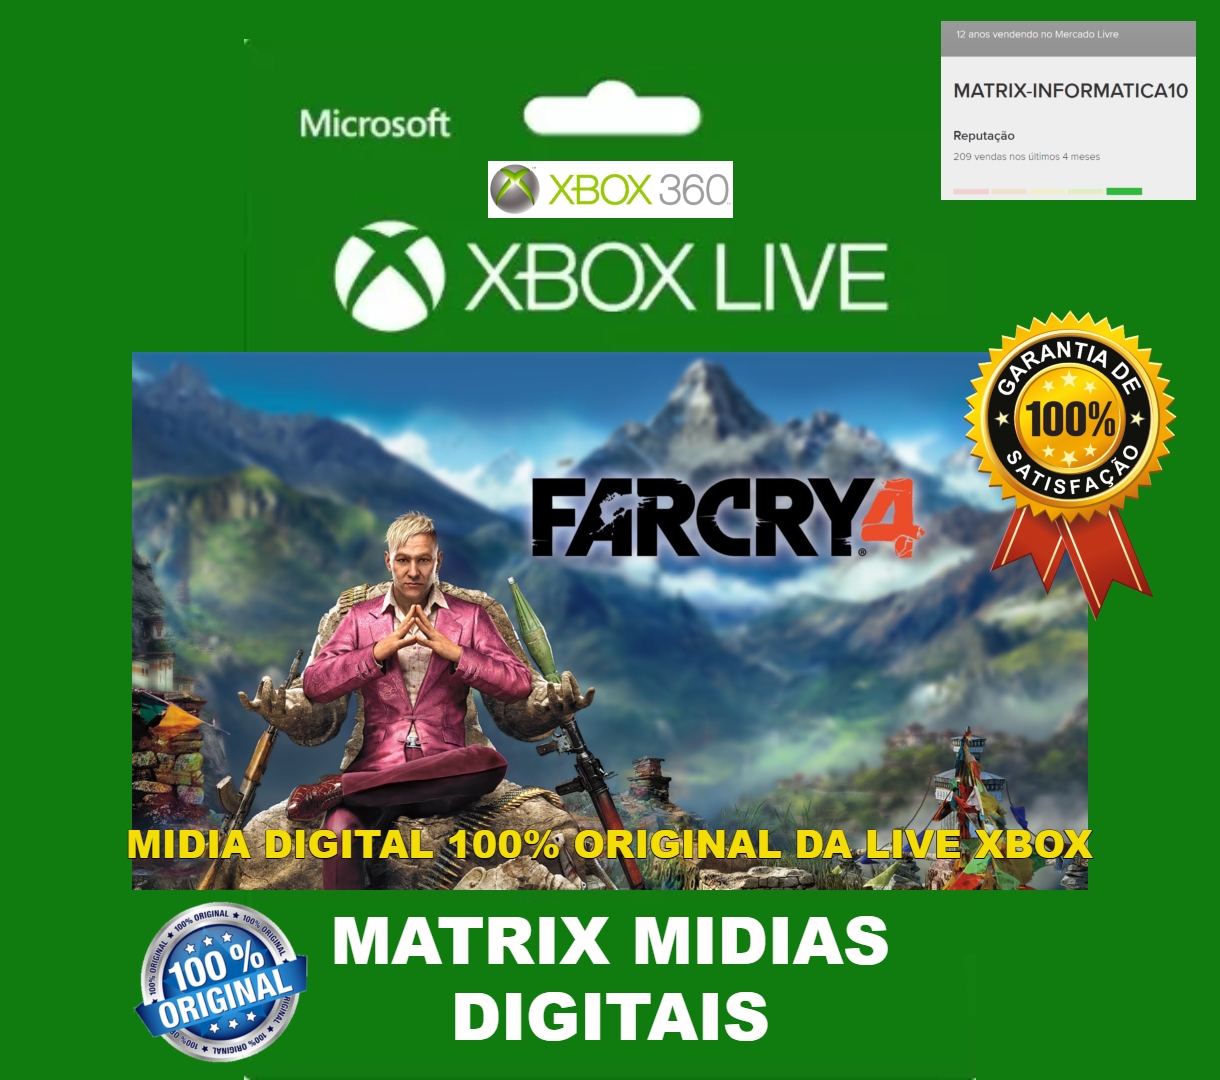 Jogos Xbox 360 transferência de Licença Mídia Digital - CALL OF JUAREZ BIB  +THE CARTEL + JUAREZ GUNSLINGER + THE KING OF FIGHTER 13 + BRINDES DA FOTO